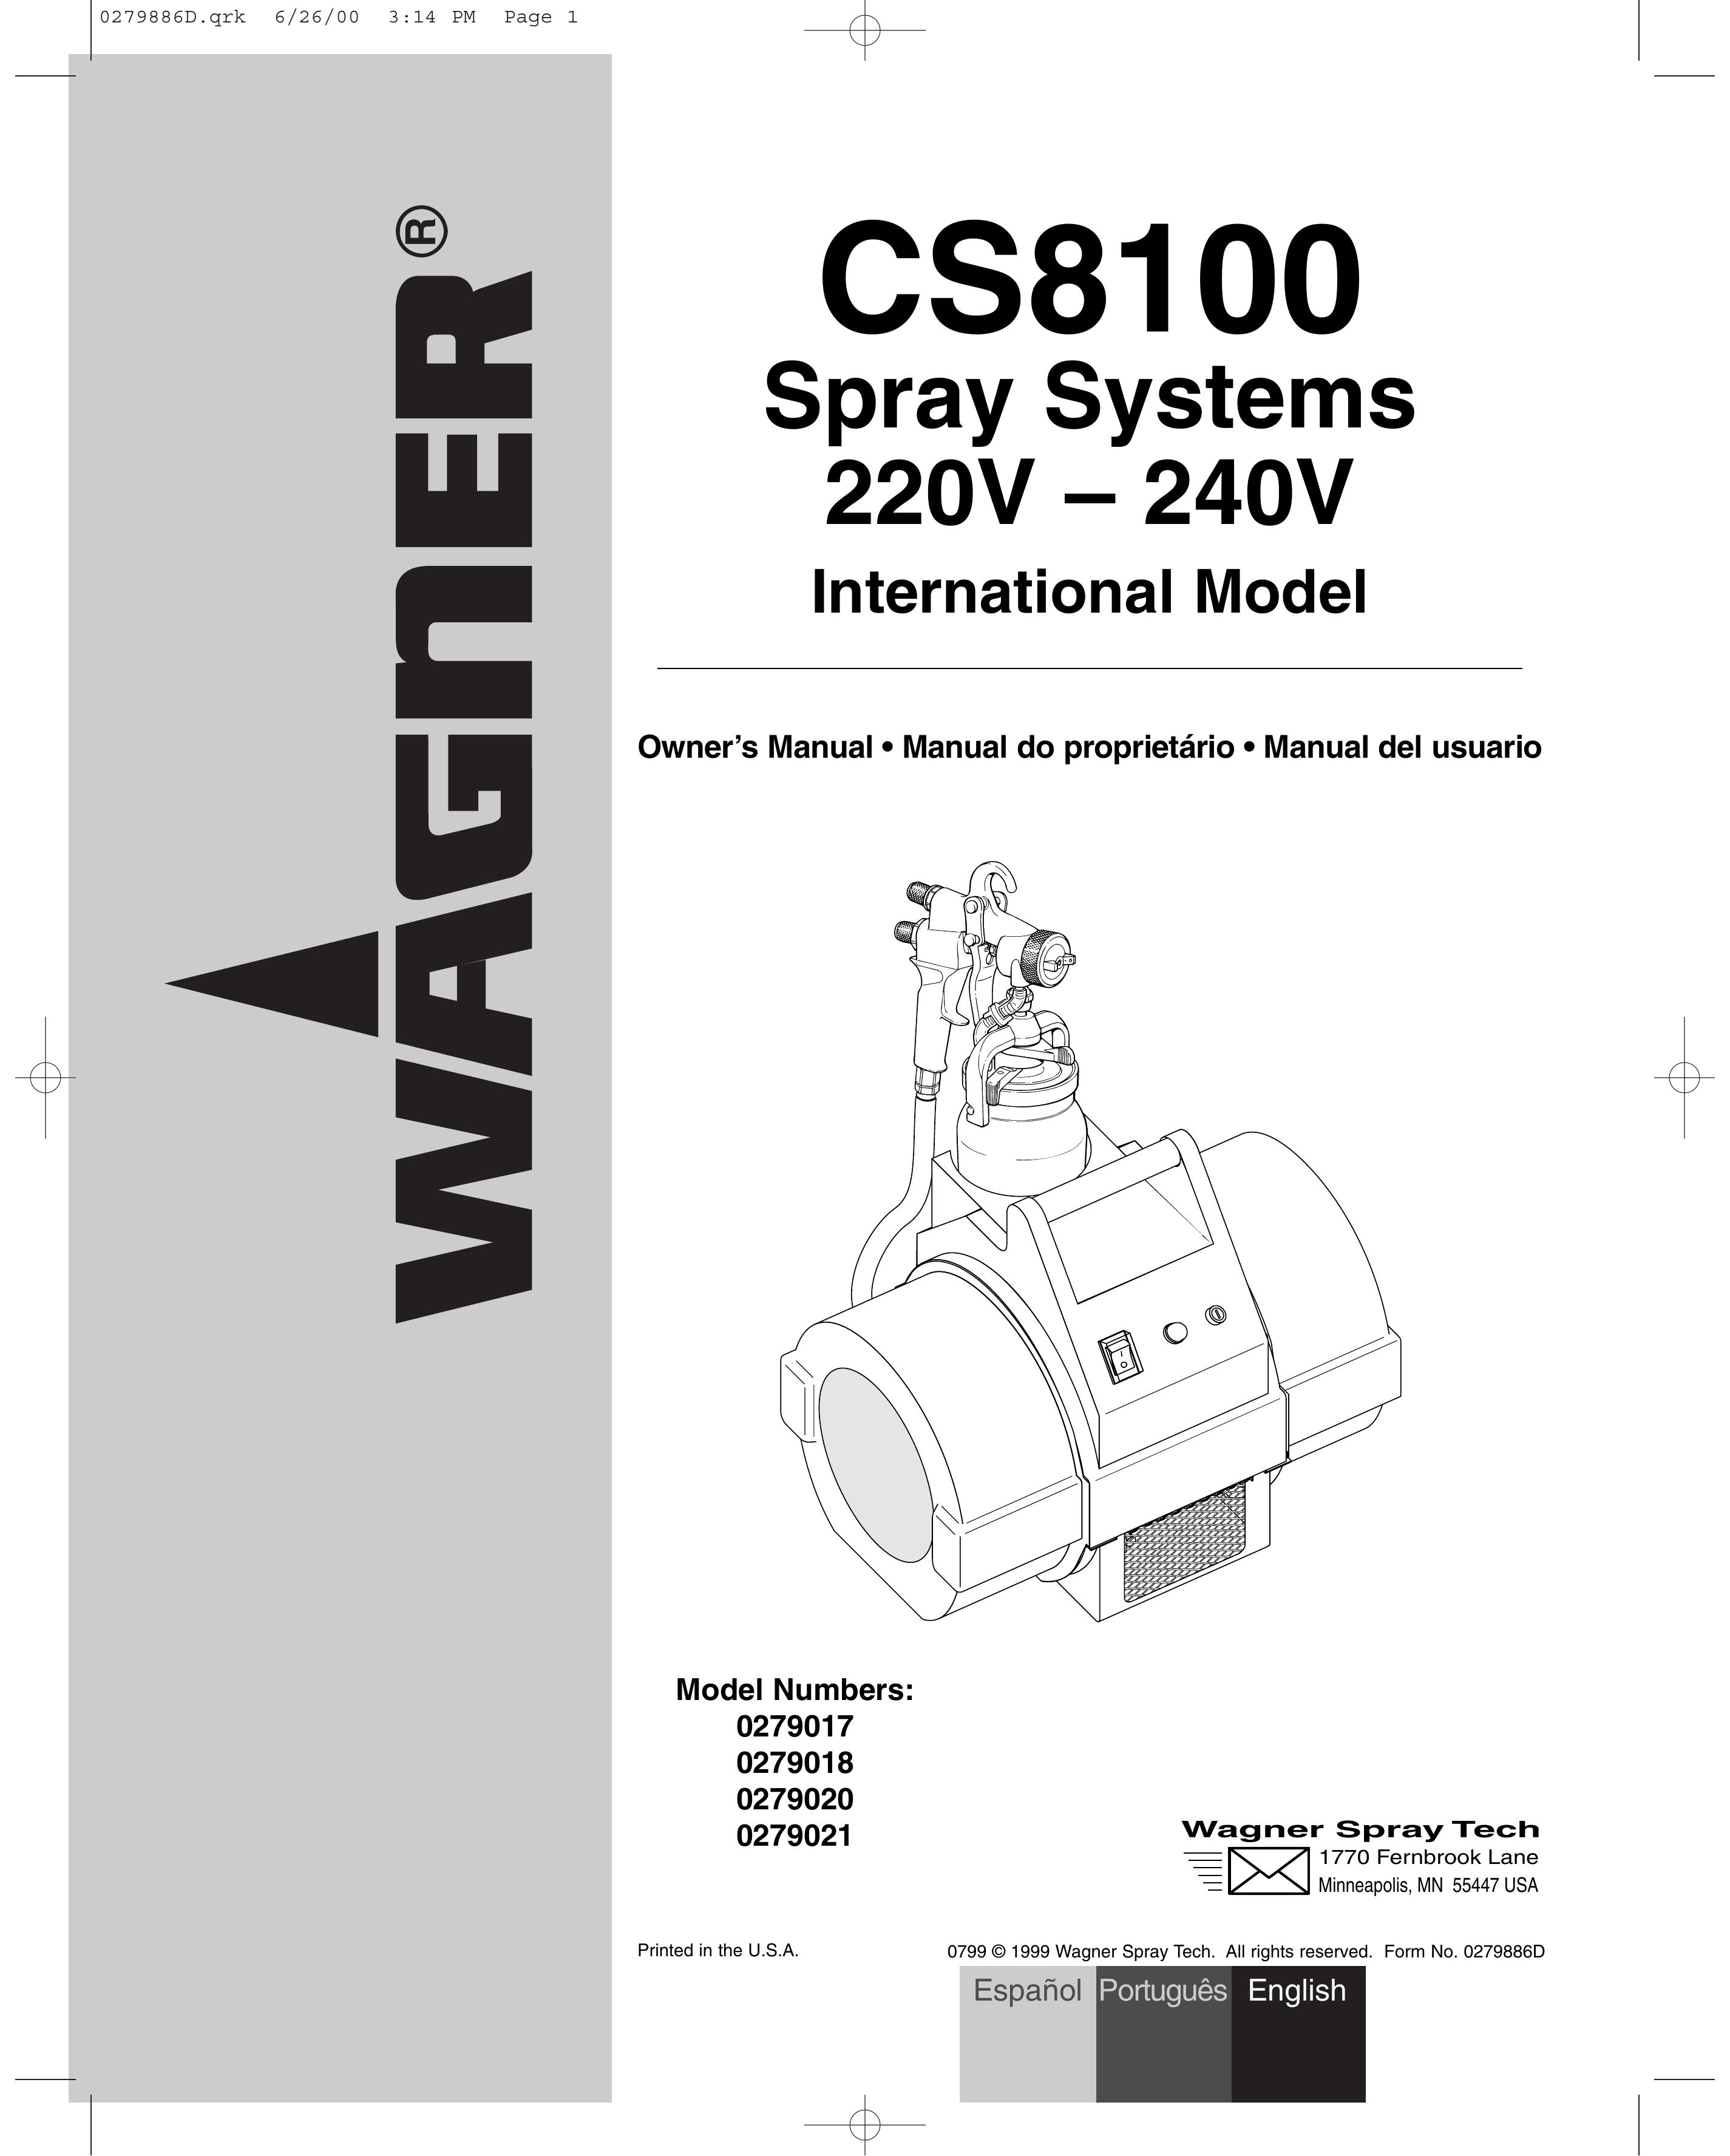 Wagner SprayTech 279021 Lawn Mower Accessory User Manual